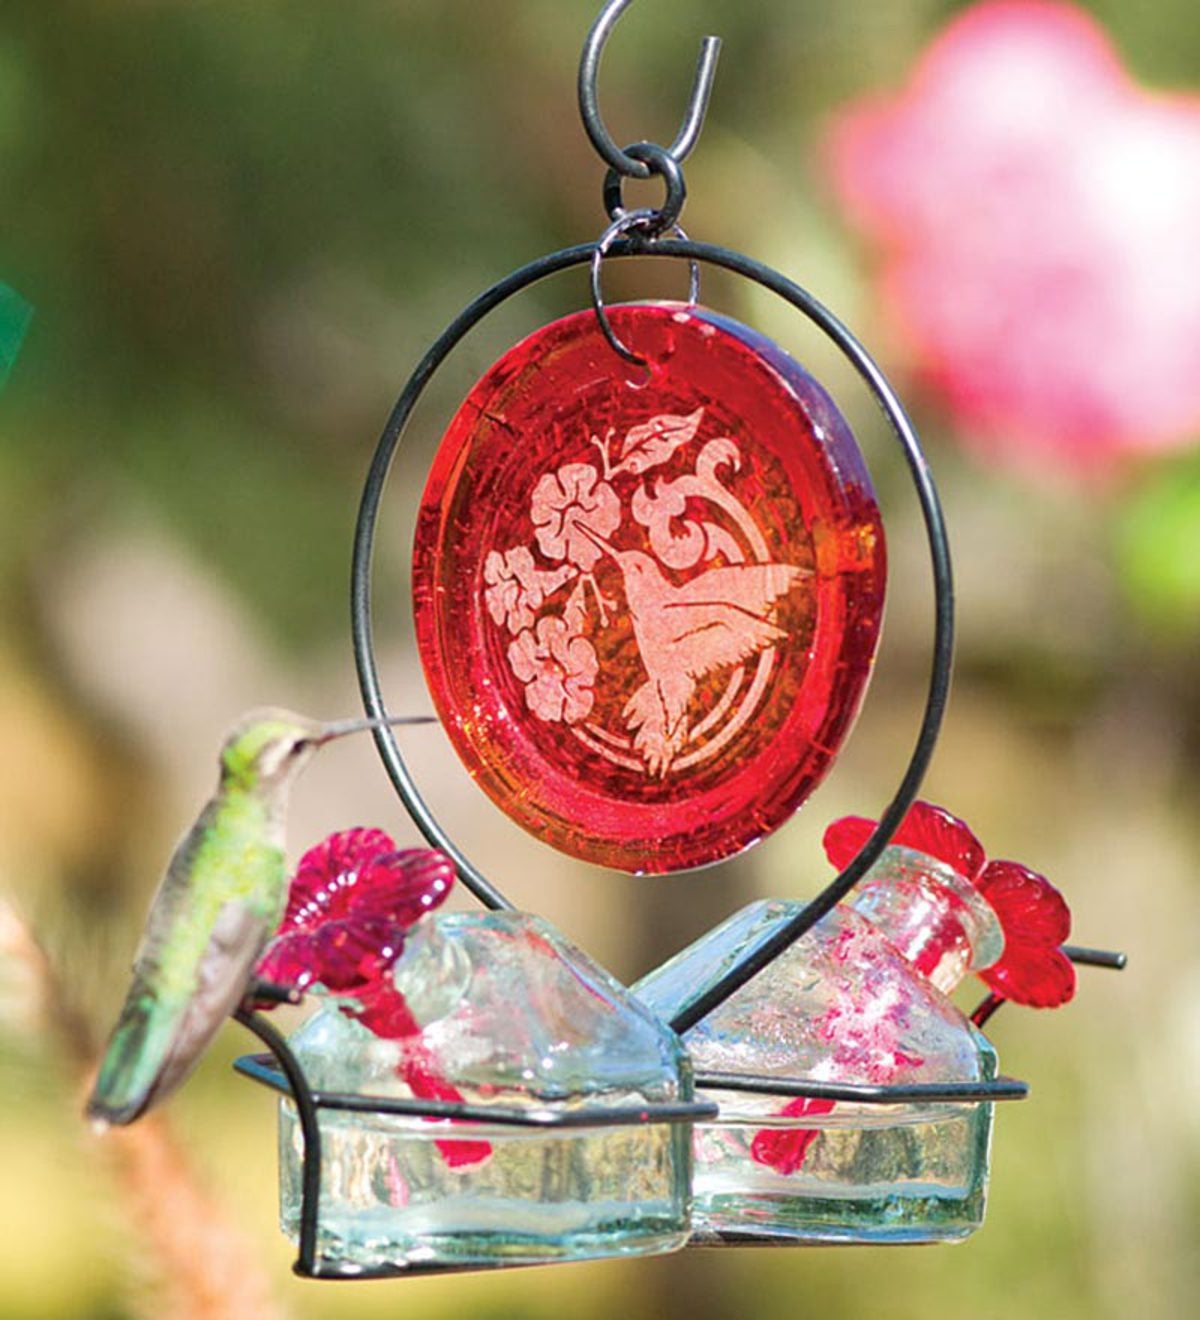 Red Medallion Glass Hummingbird Feeder